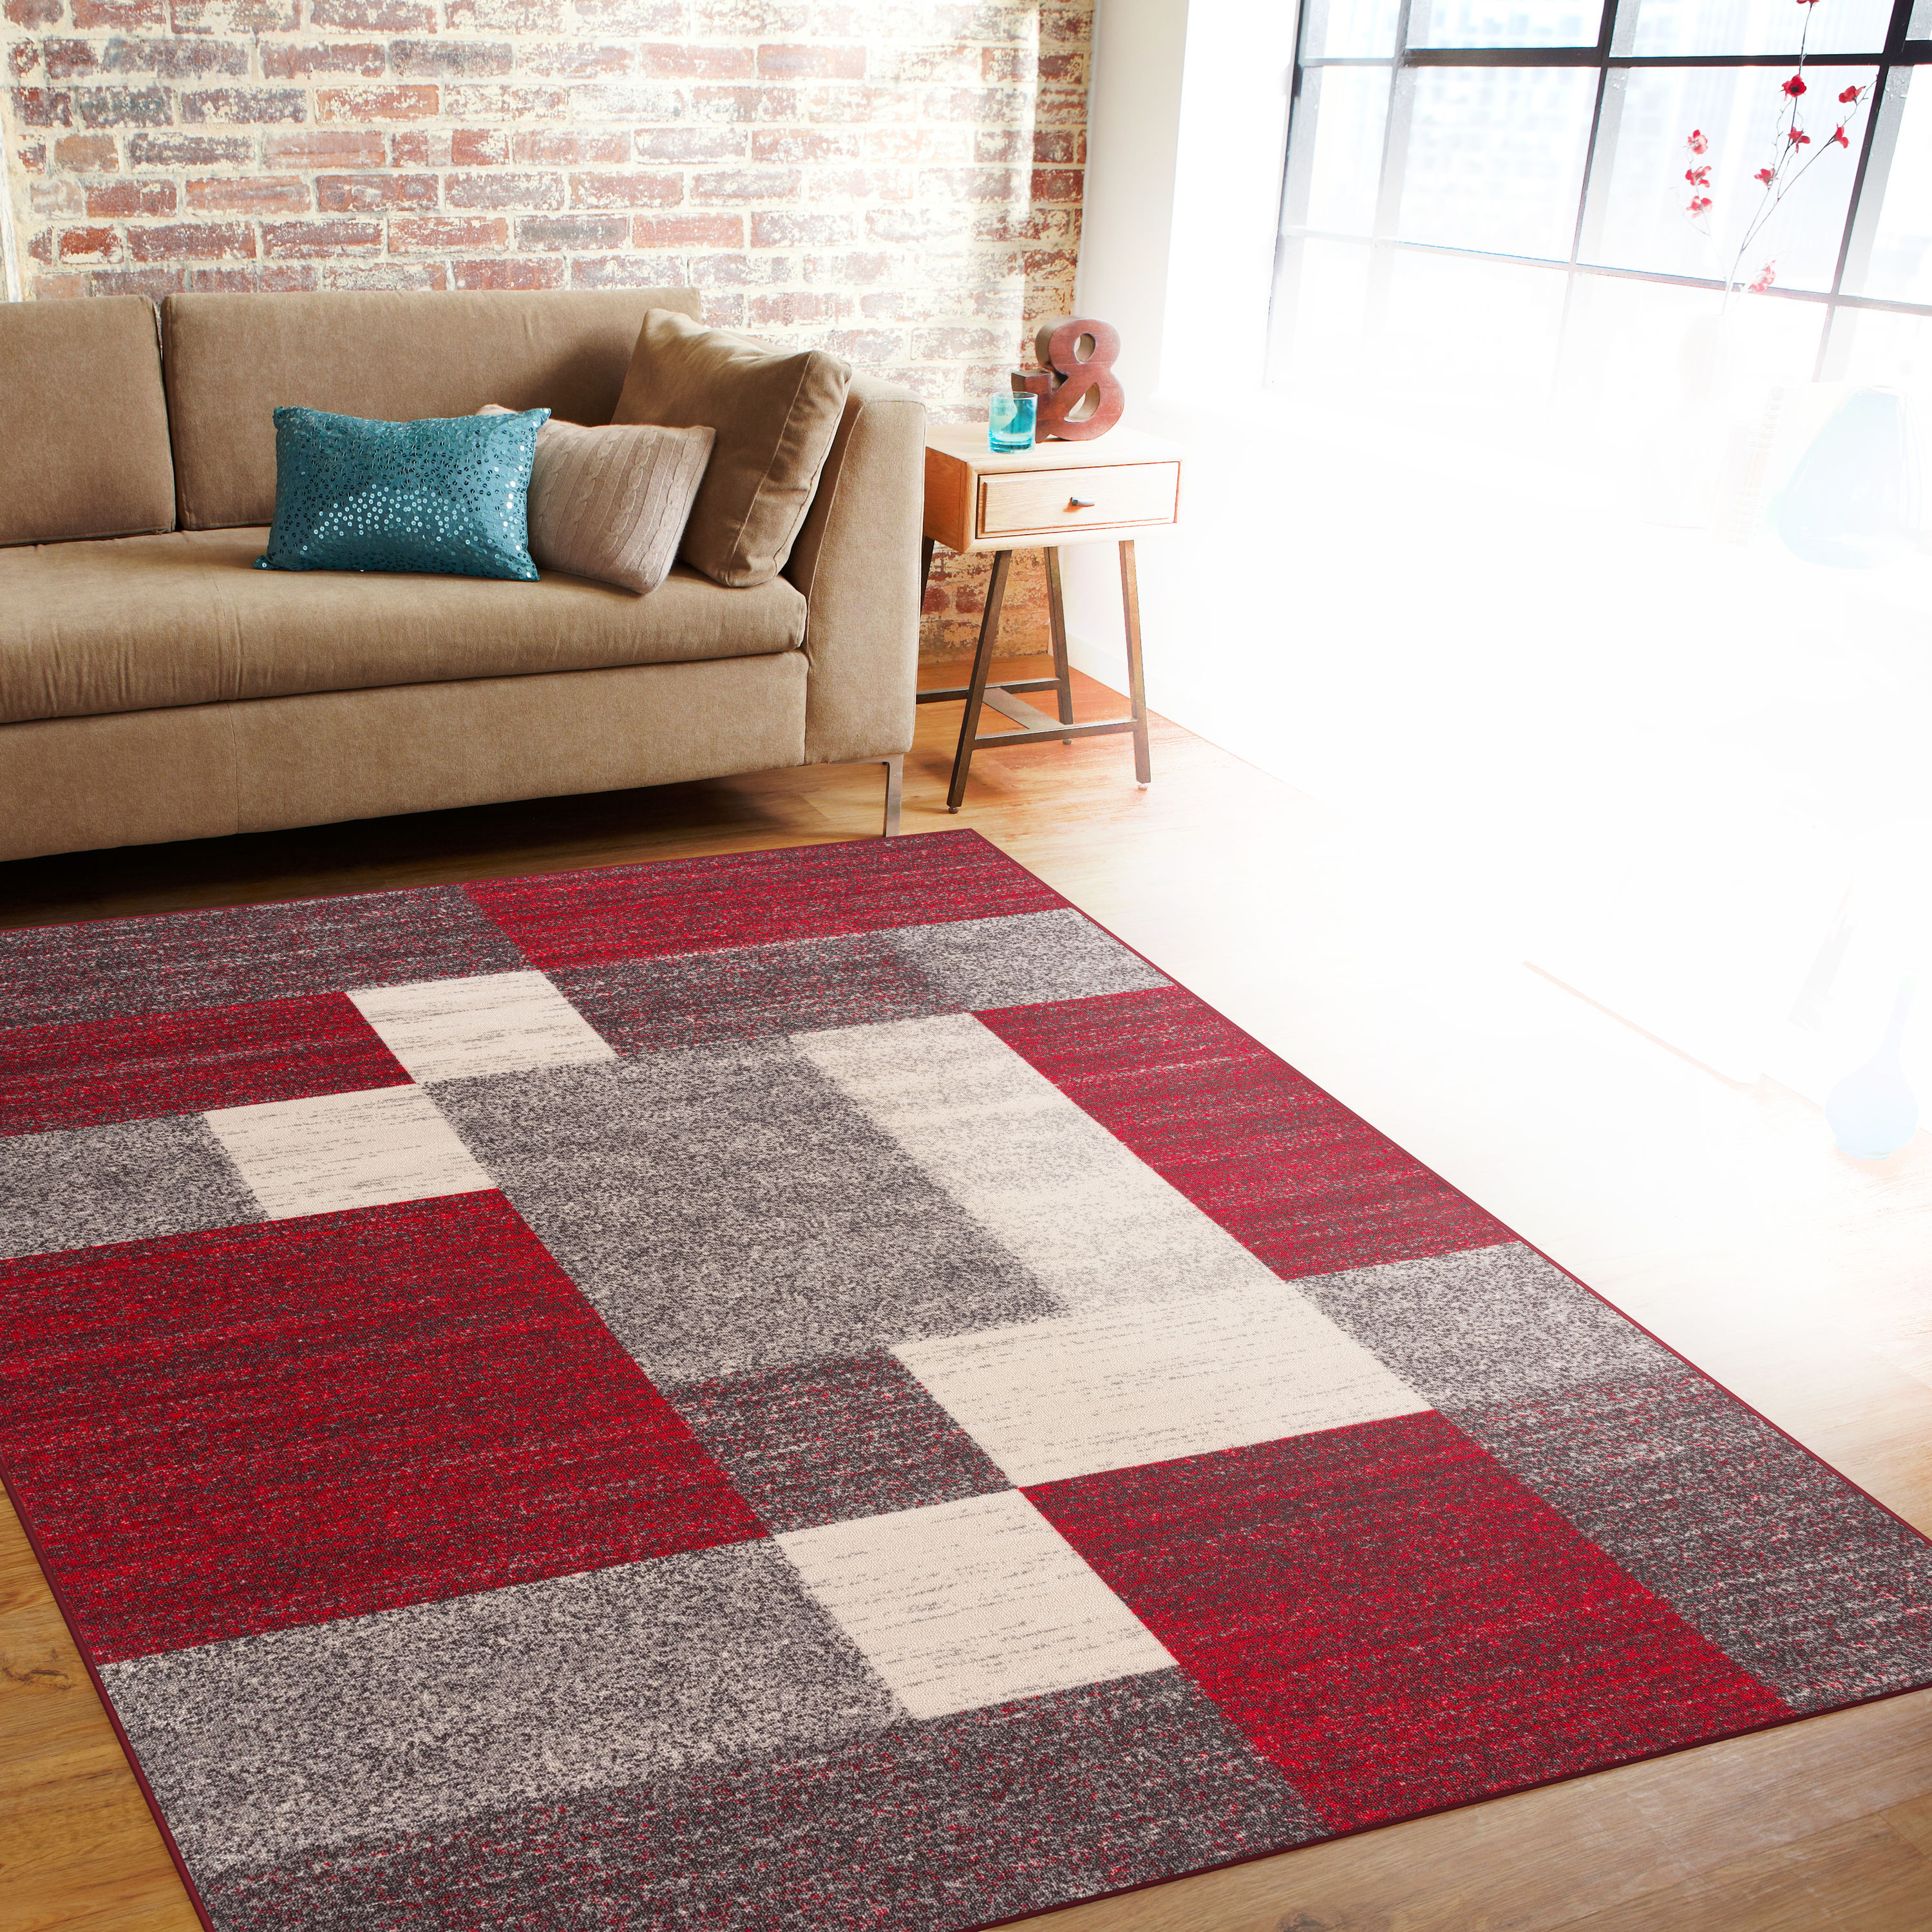 Pattern 69 A Little Decorum - vinyl floor cloth